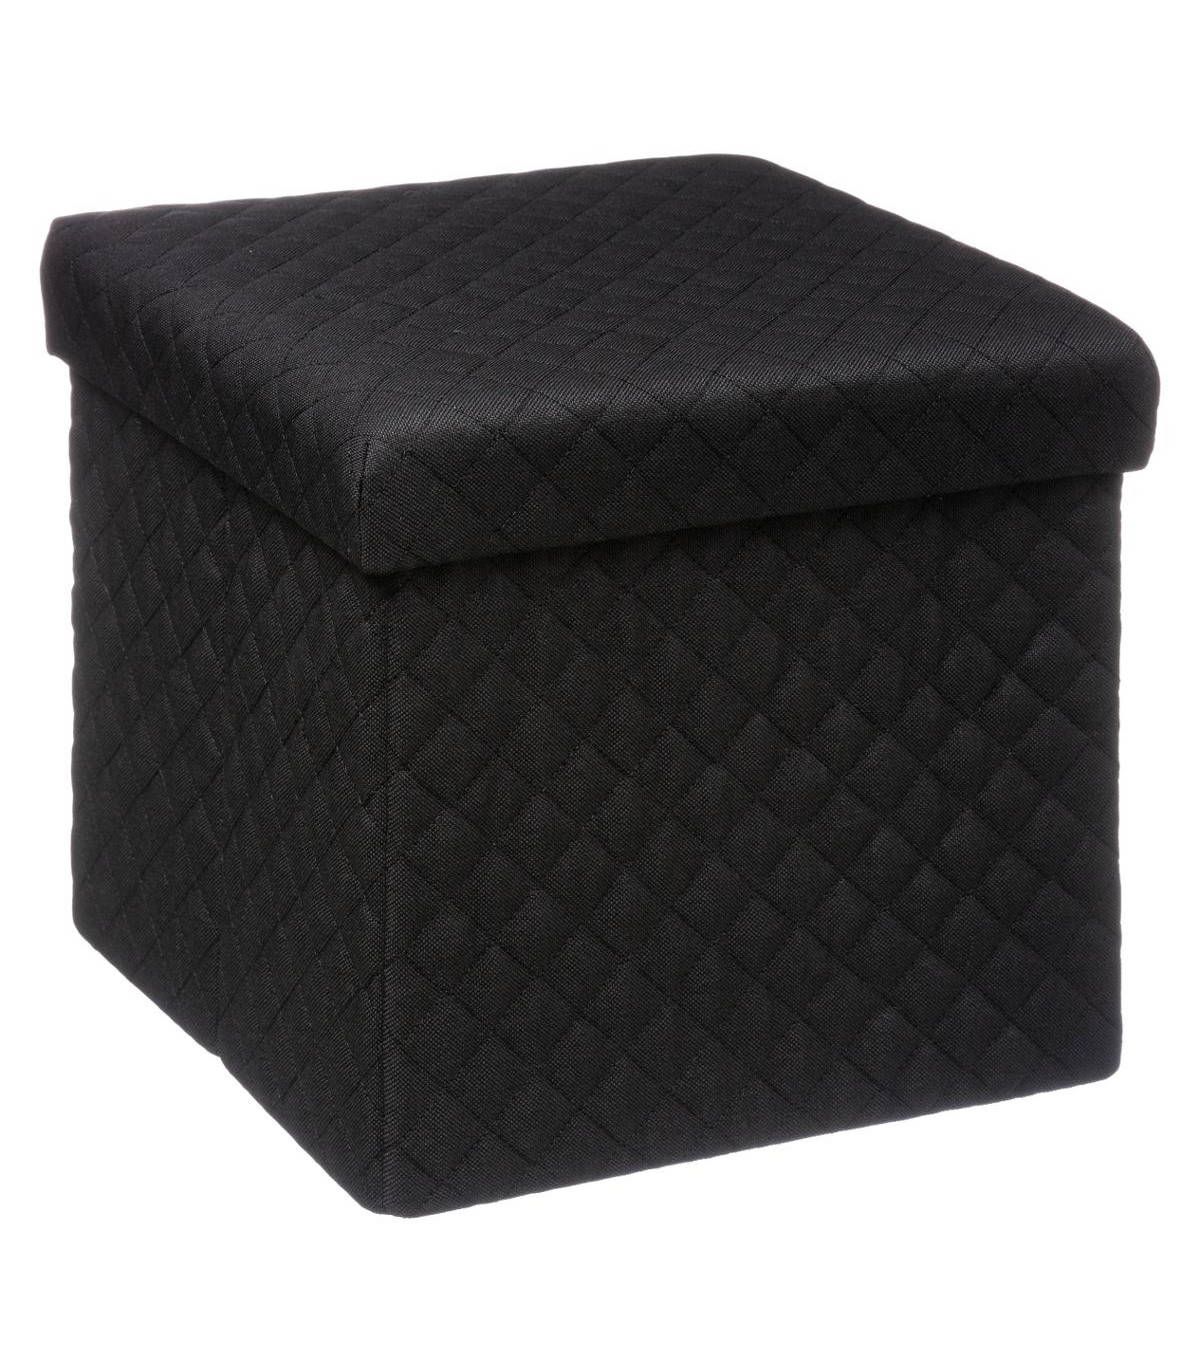 5five Simply Smart Stolička s úložným prostorem, černá, 31 x 30 x 31 cm - EDAXO.CZ s.r.o.